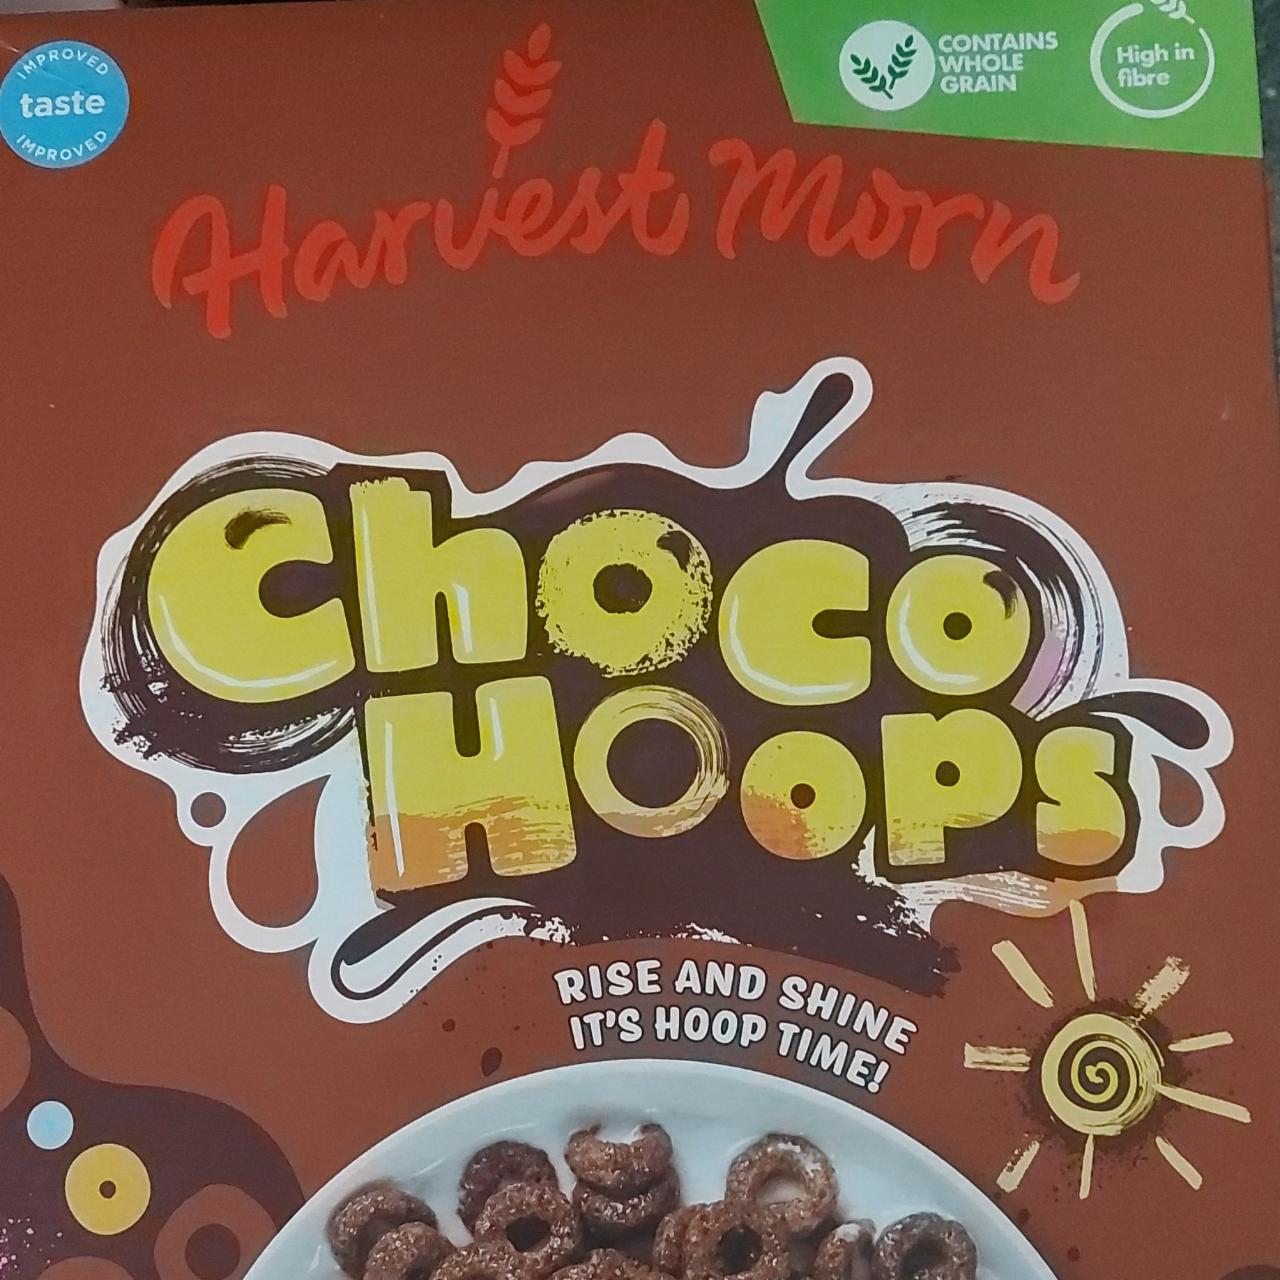 Fotografie - Choco hoops Harvest Morn